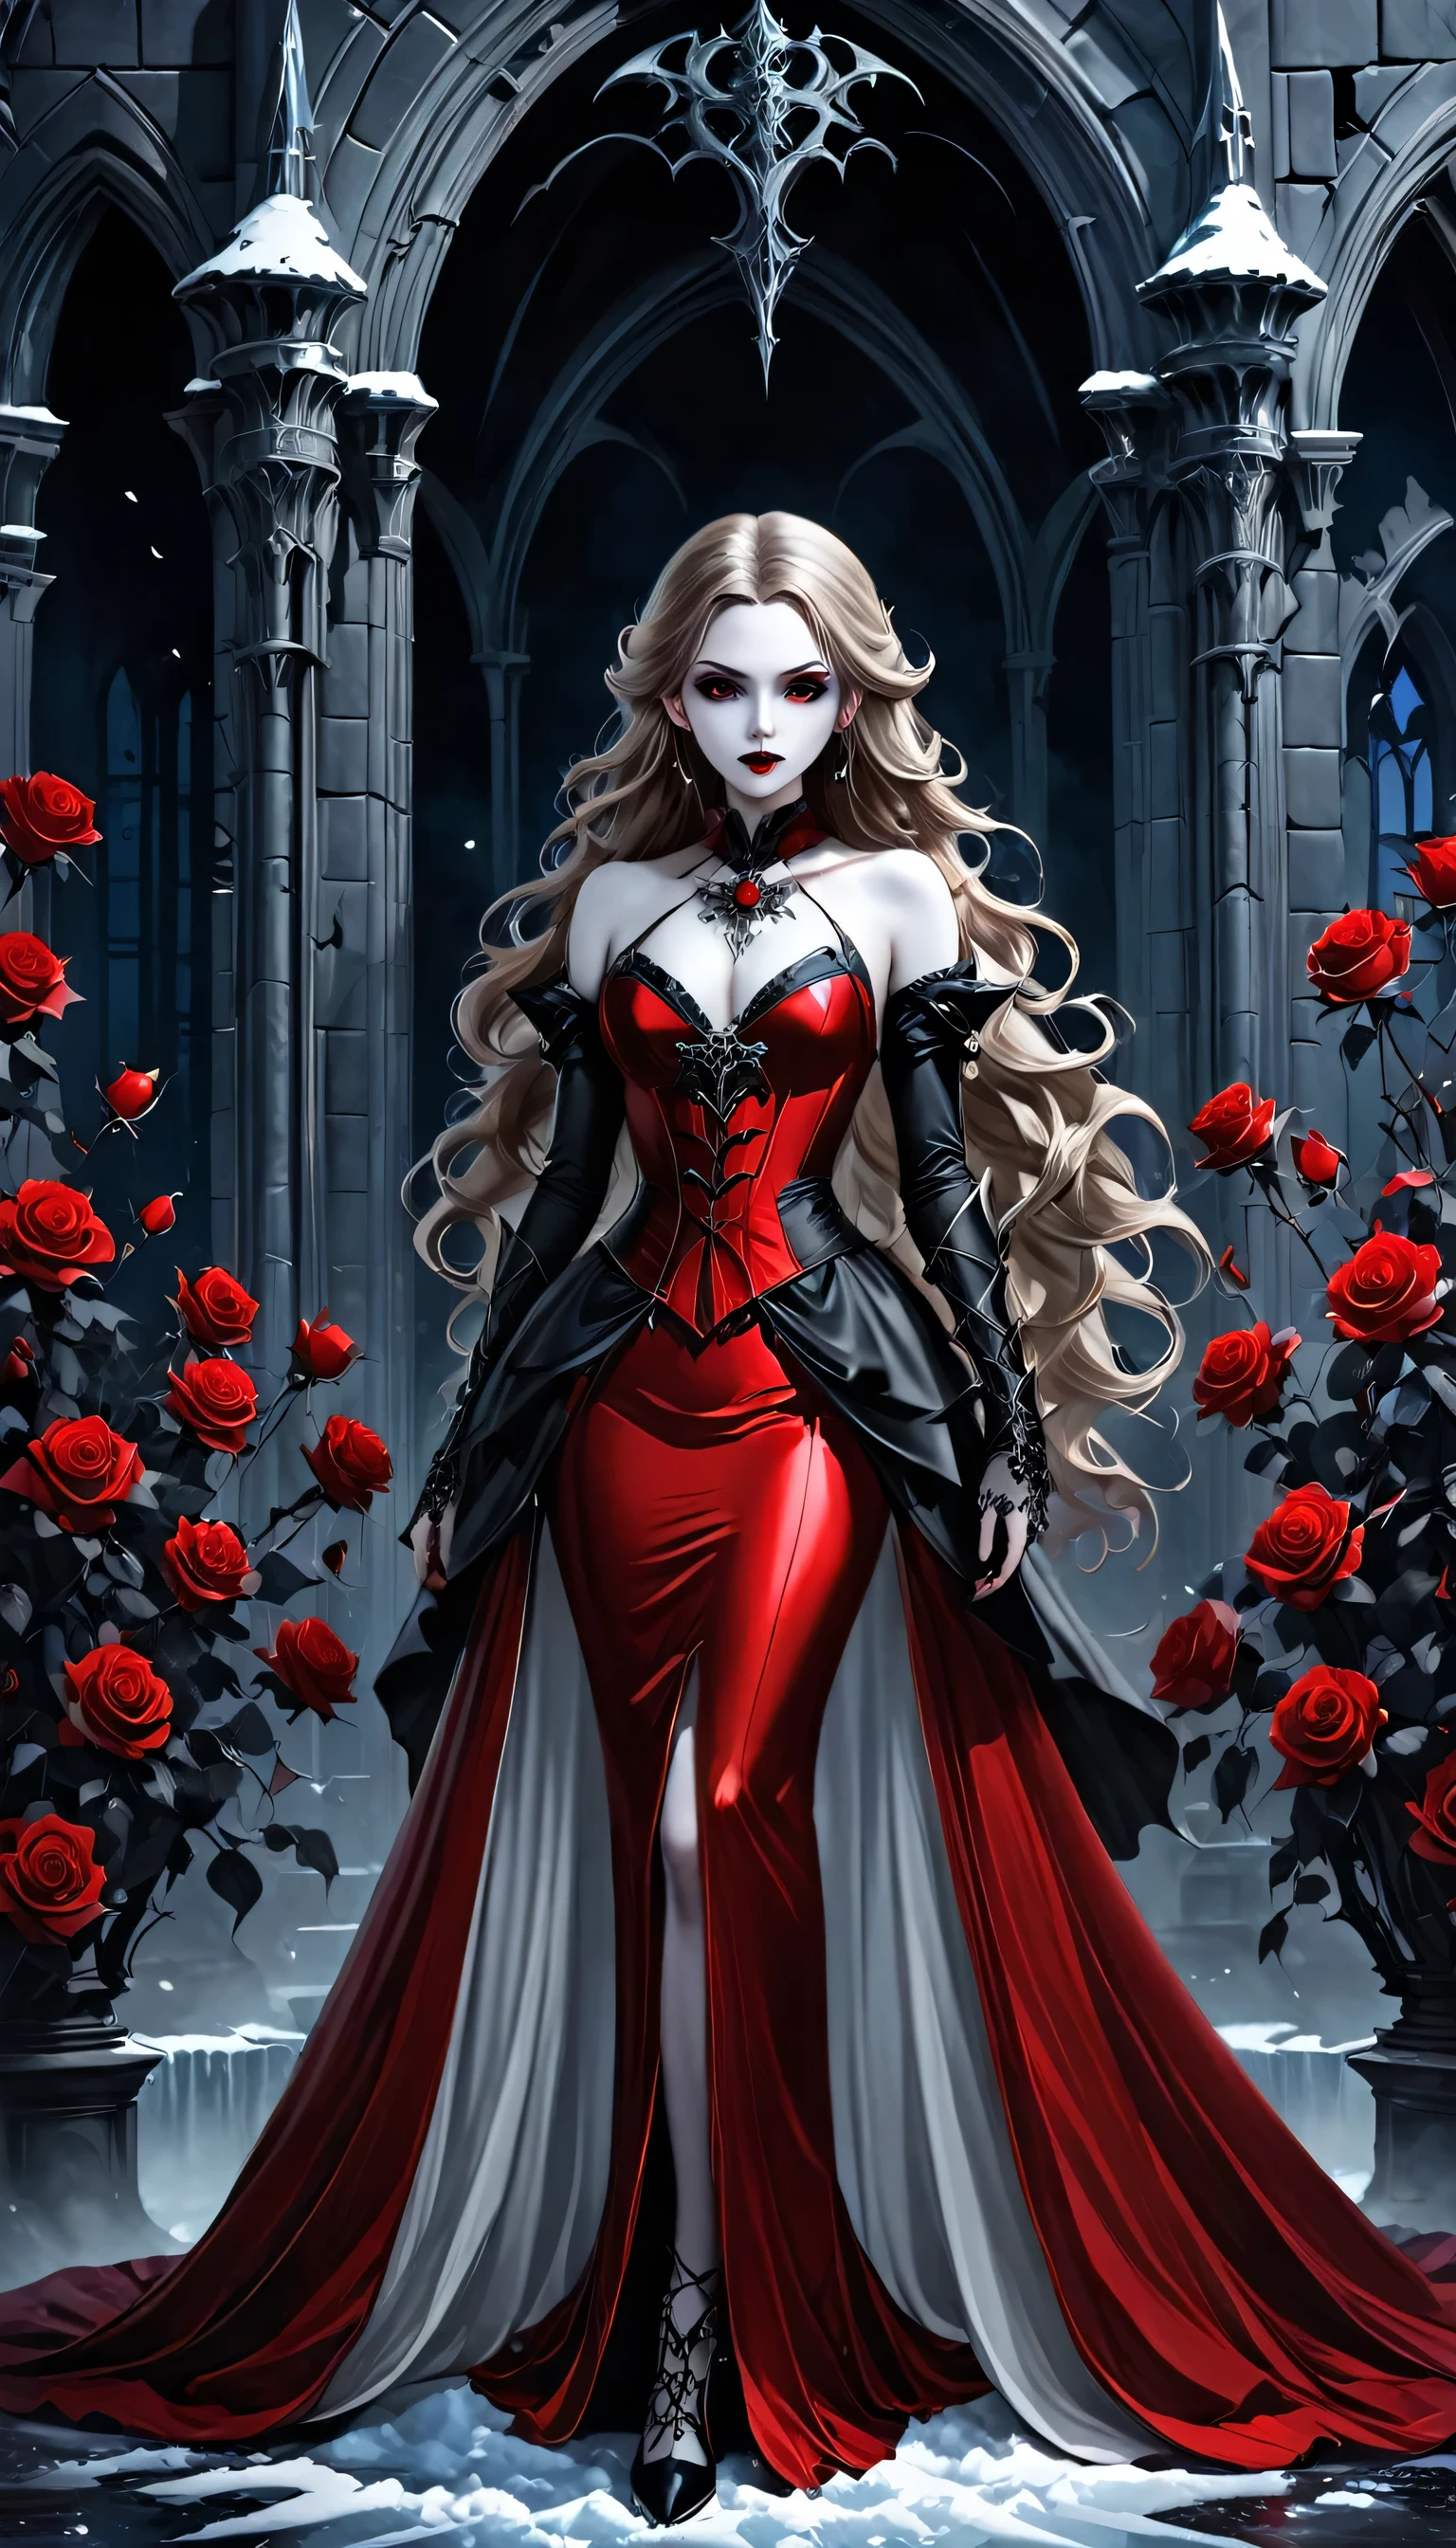 Dark 幻想藝術, 幻想藝術, 歌德藝術,  女吸血鬼的照片, 精緻的美麗, 全身照, 黑暗魅力拍攝,  蒼白的皮膚, 深金色頭髮, 長髮, 捲髮, (冰灰色: 1.3) 眼睛,  她穿著 (紅色的: 1.3) 裙子, Armo紅色的Dress, 纏繞著 (黑色的: 1.3)  玫瑰花, 高跟鞋, 黑暗城堡